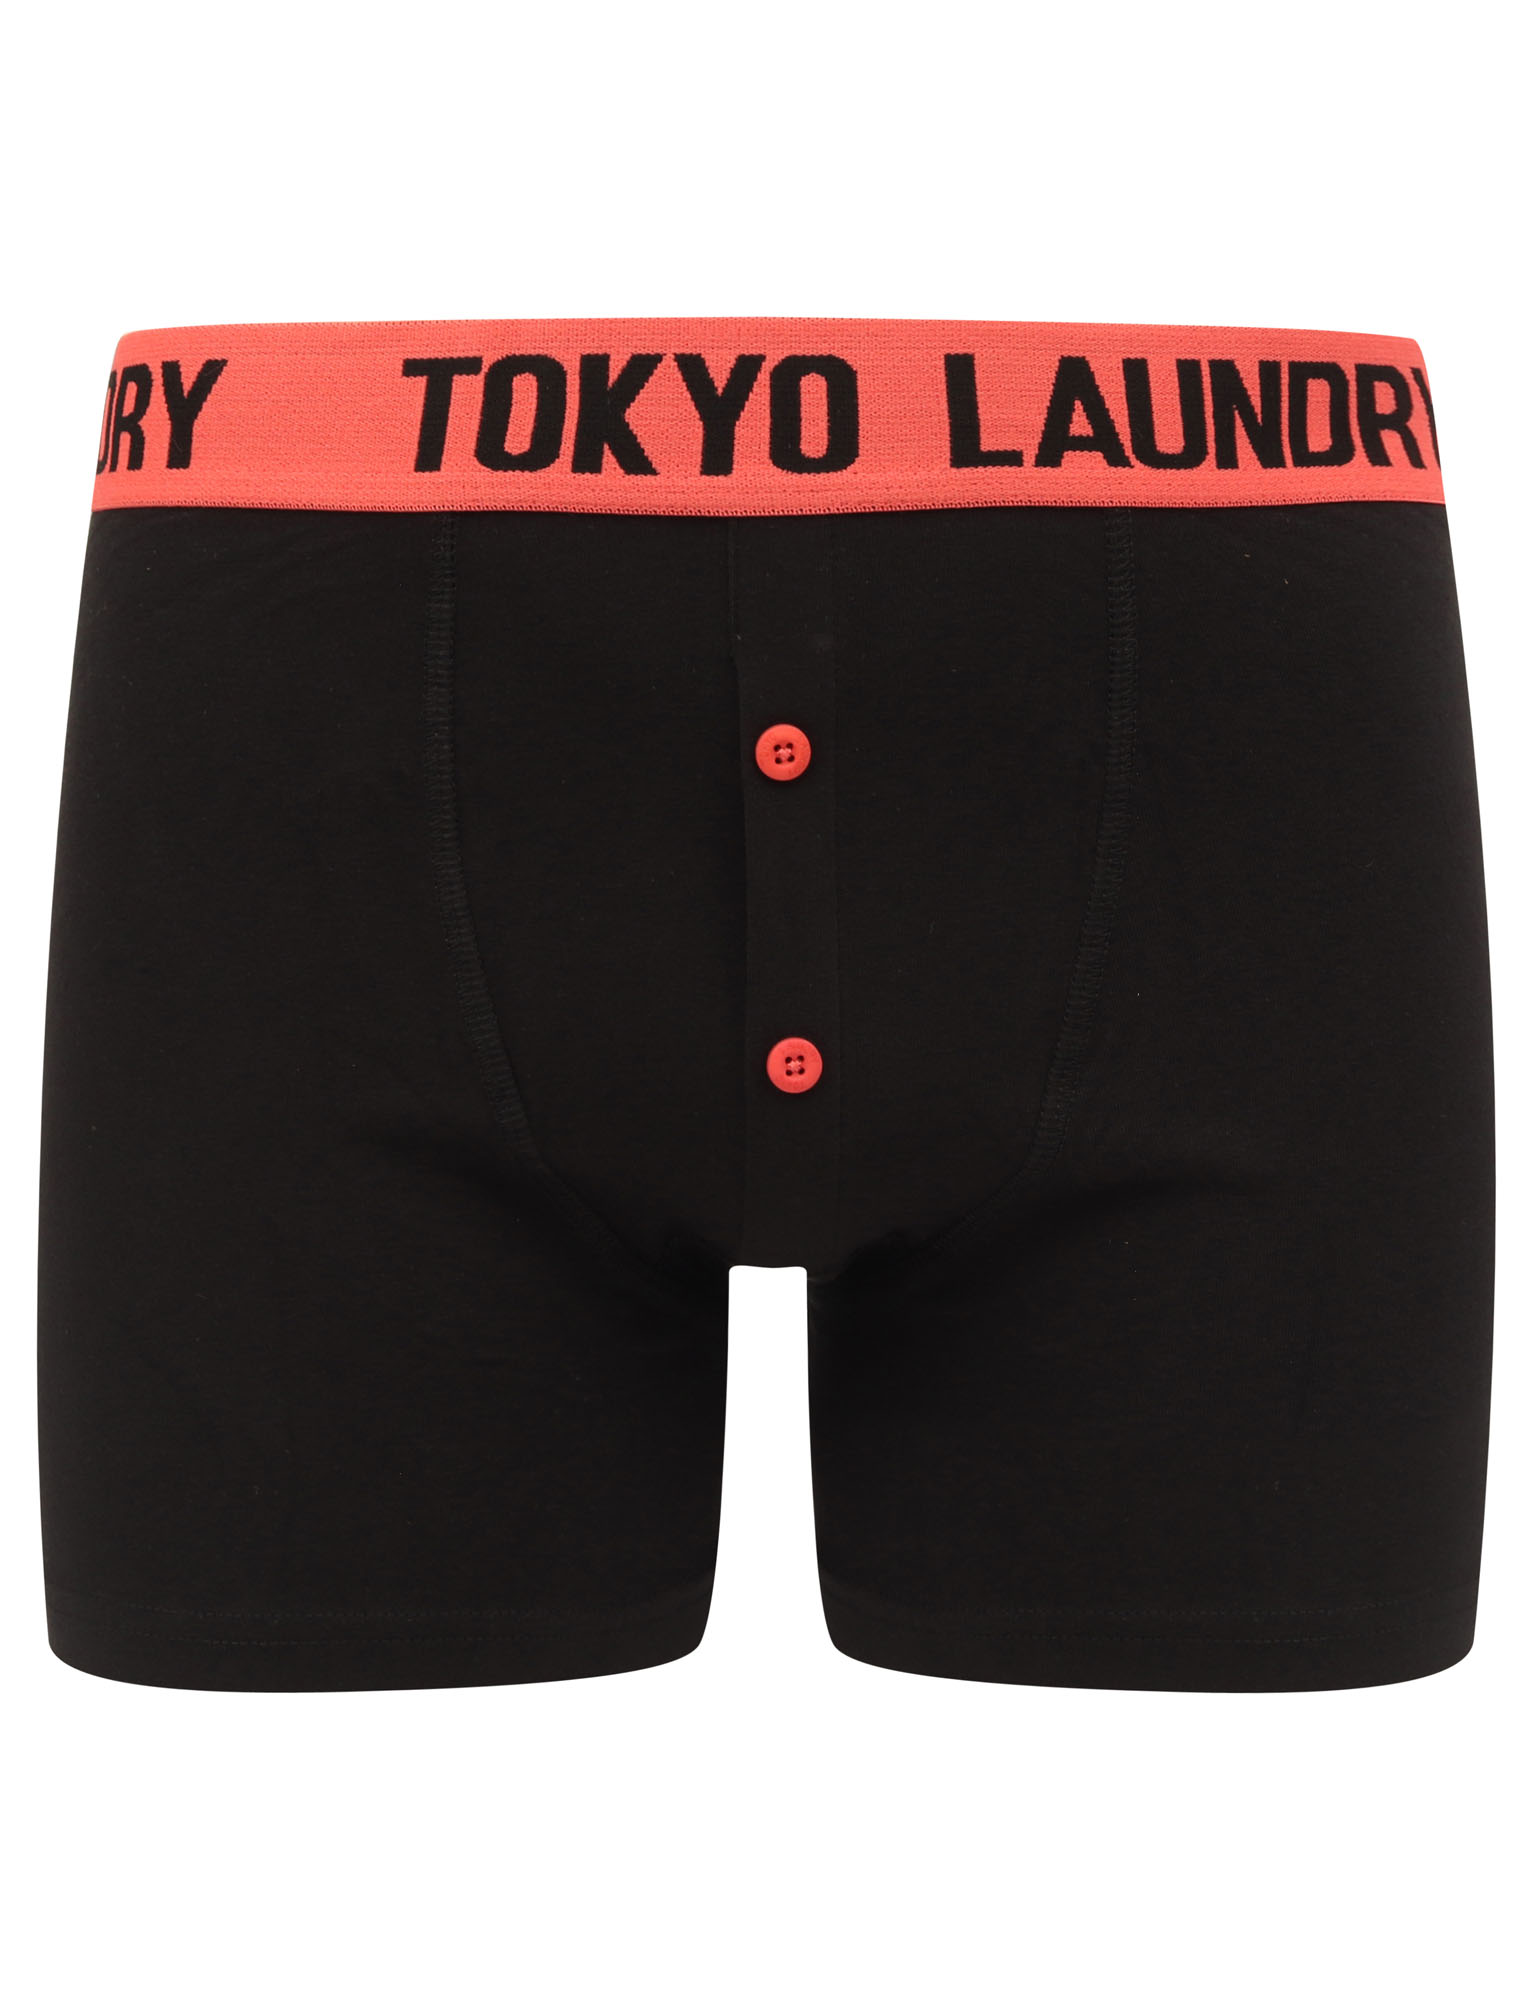 Tokyo Laundry Boxer Shorts Men's Boxers Trunks Underwear Black Stretch ...